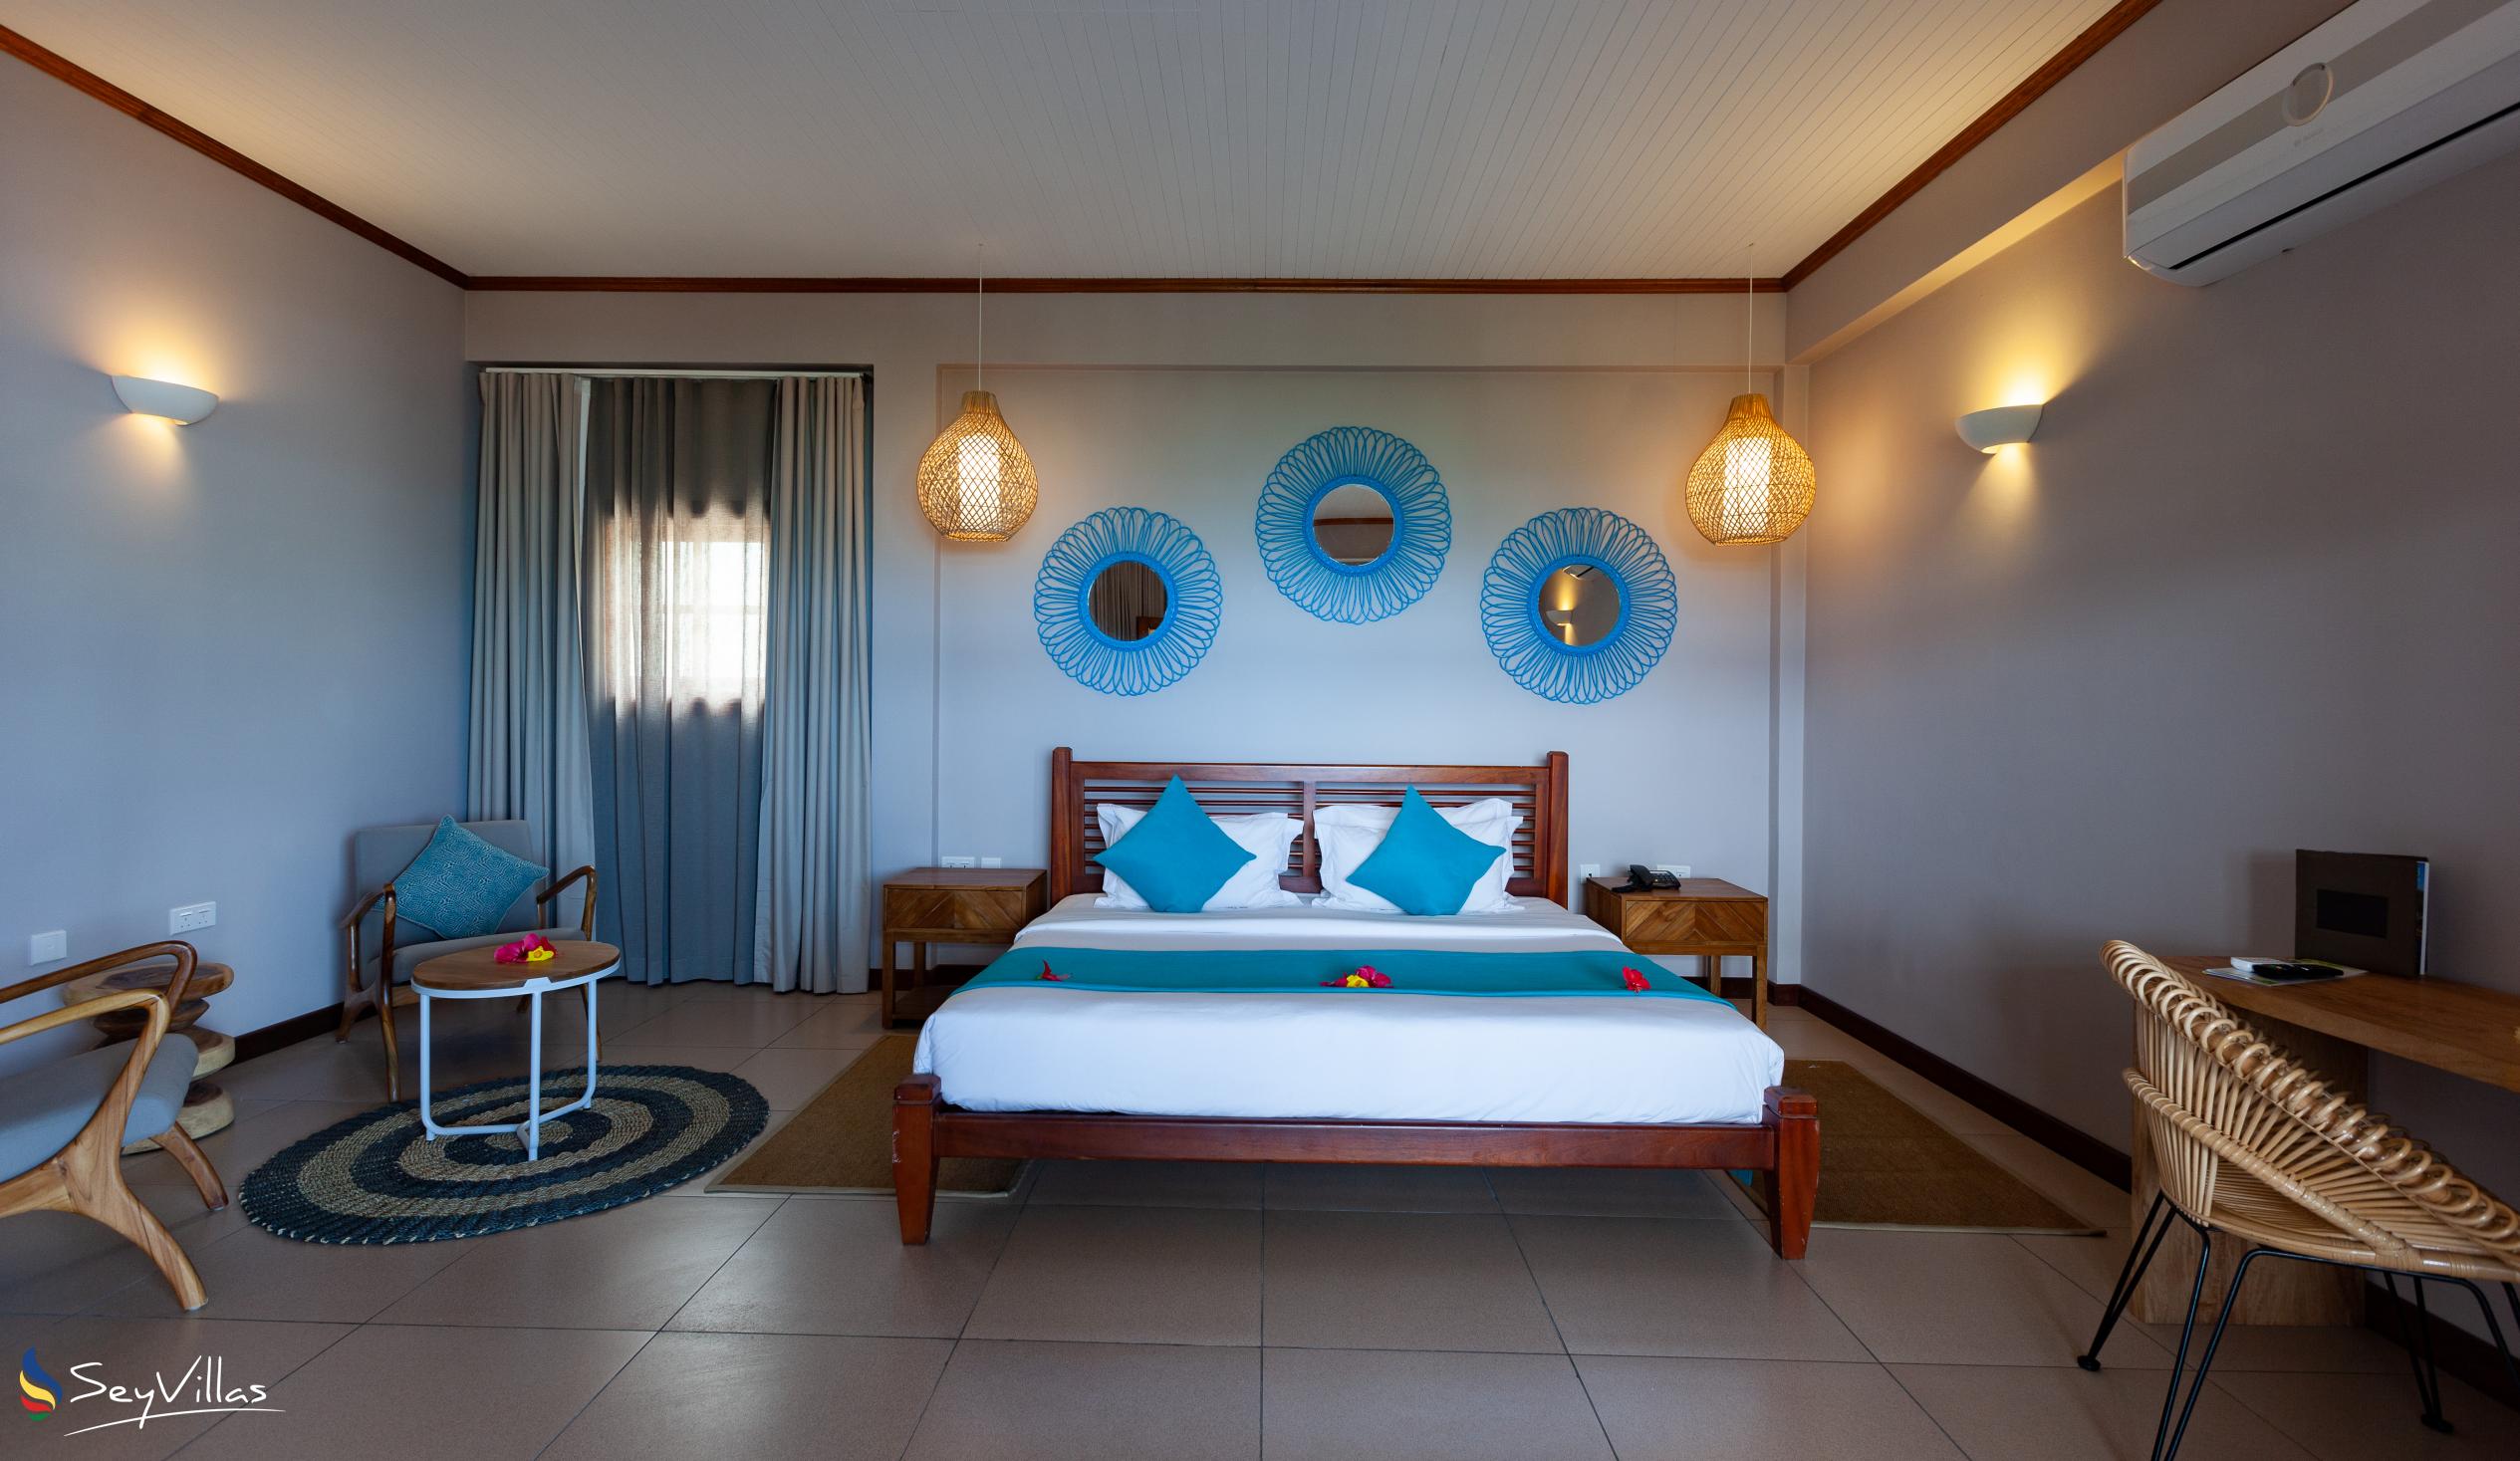 Photo 125: Hotel L'Archipel - Family Suite - Praslin (Seychelles)